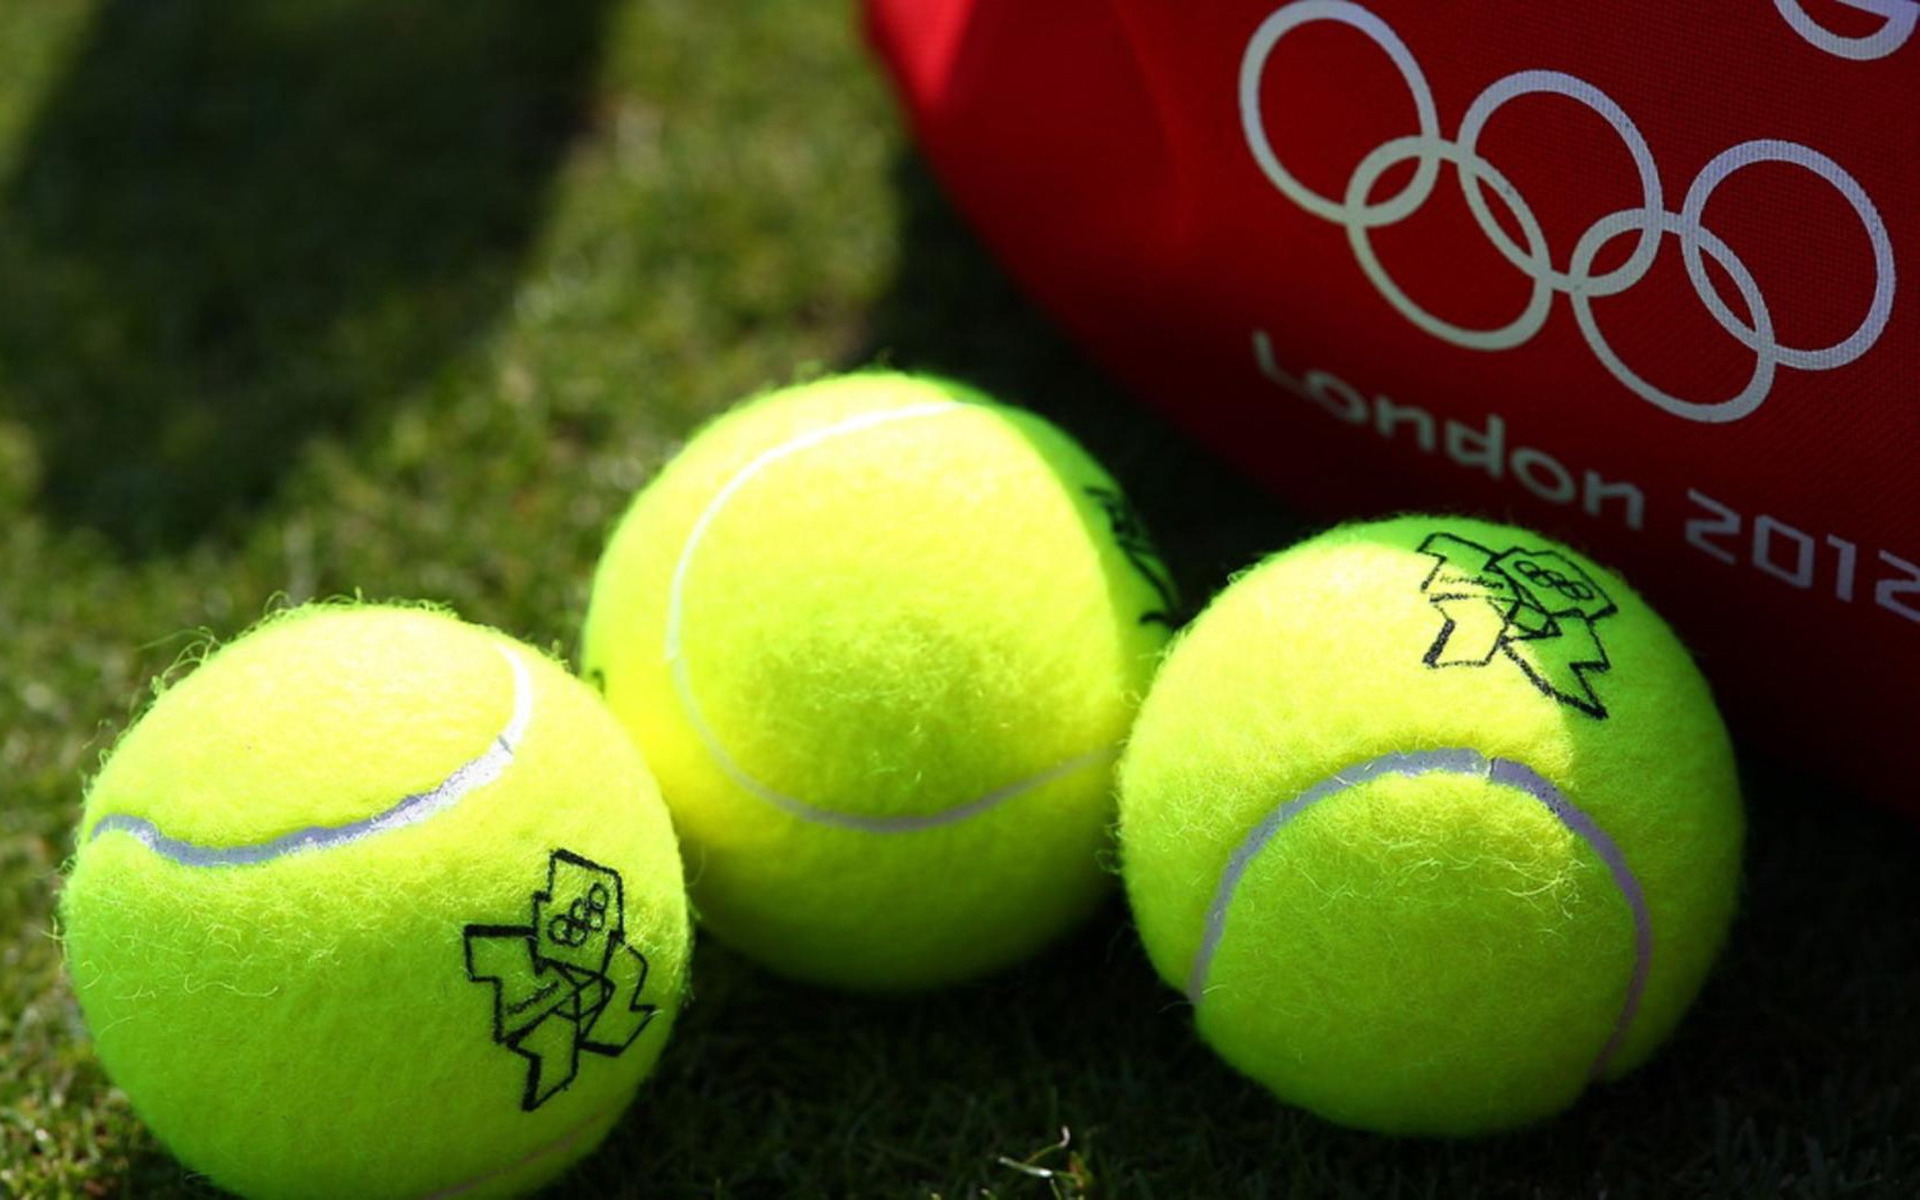 London 2012 Olympics Tennis Balls for 1920 x 1200 widescreen resolution